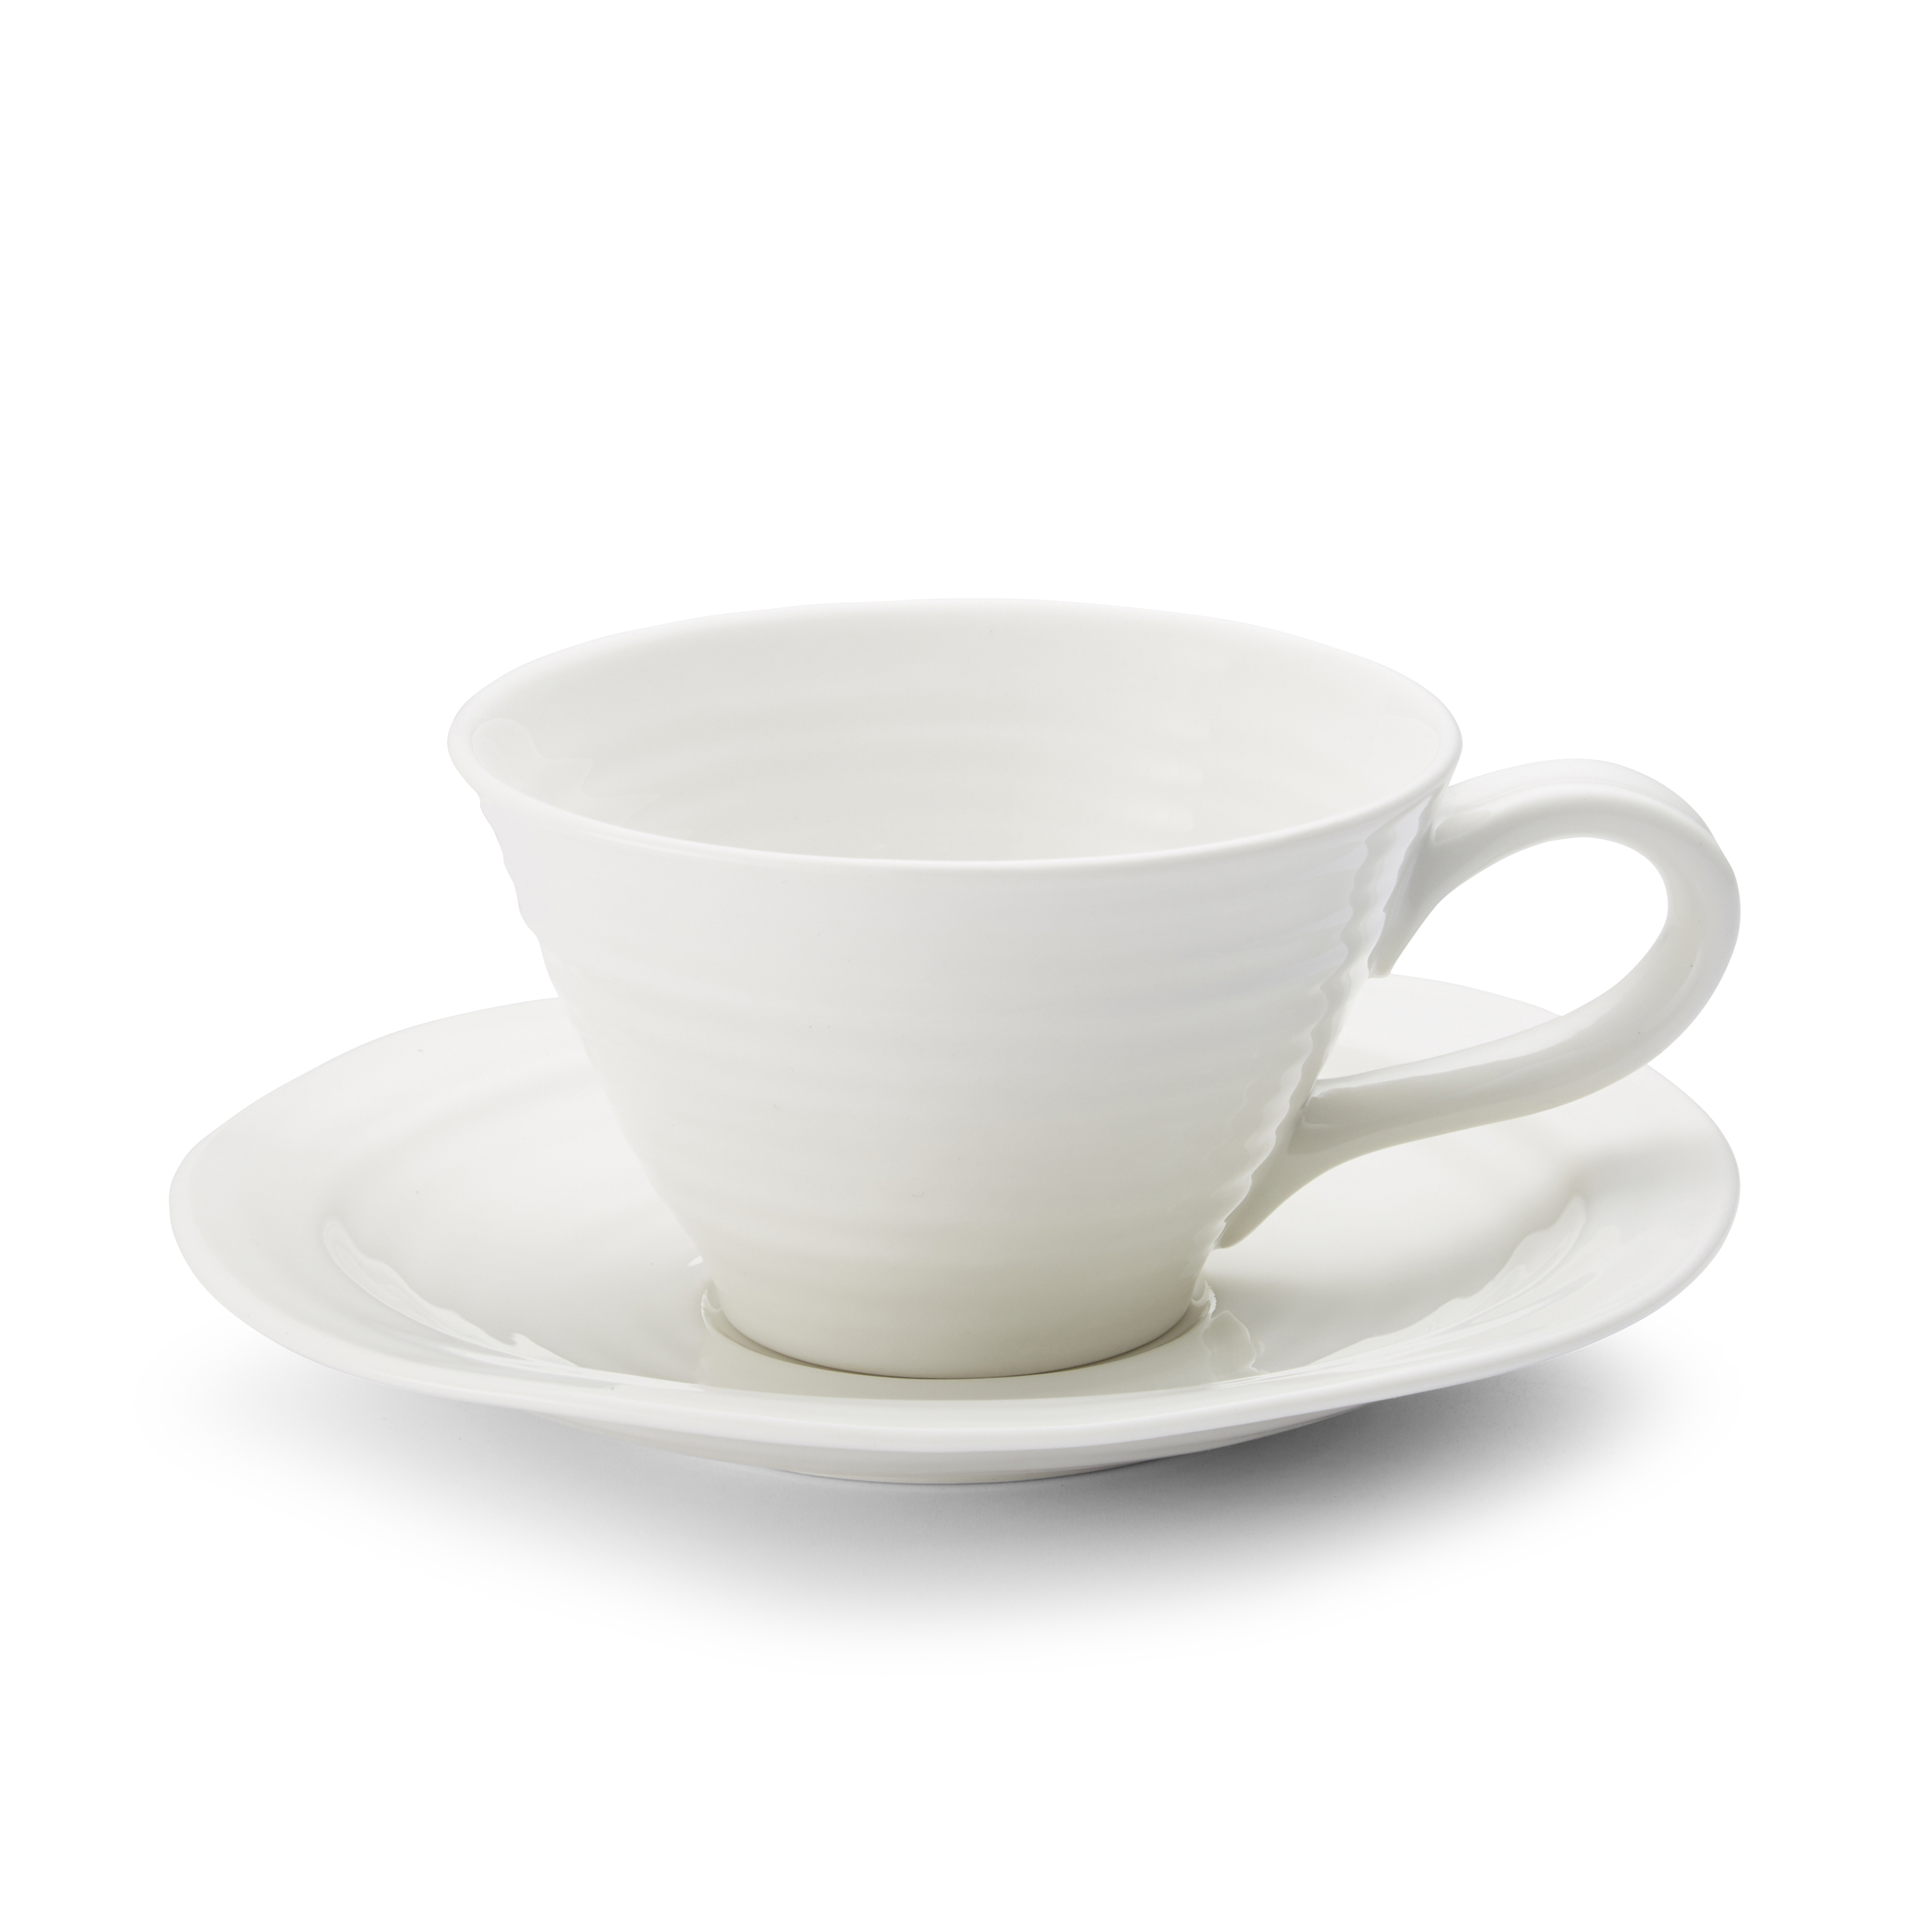 Sophie Conran Set of 4 Teacup & Saucer, White image number null